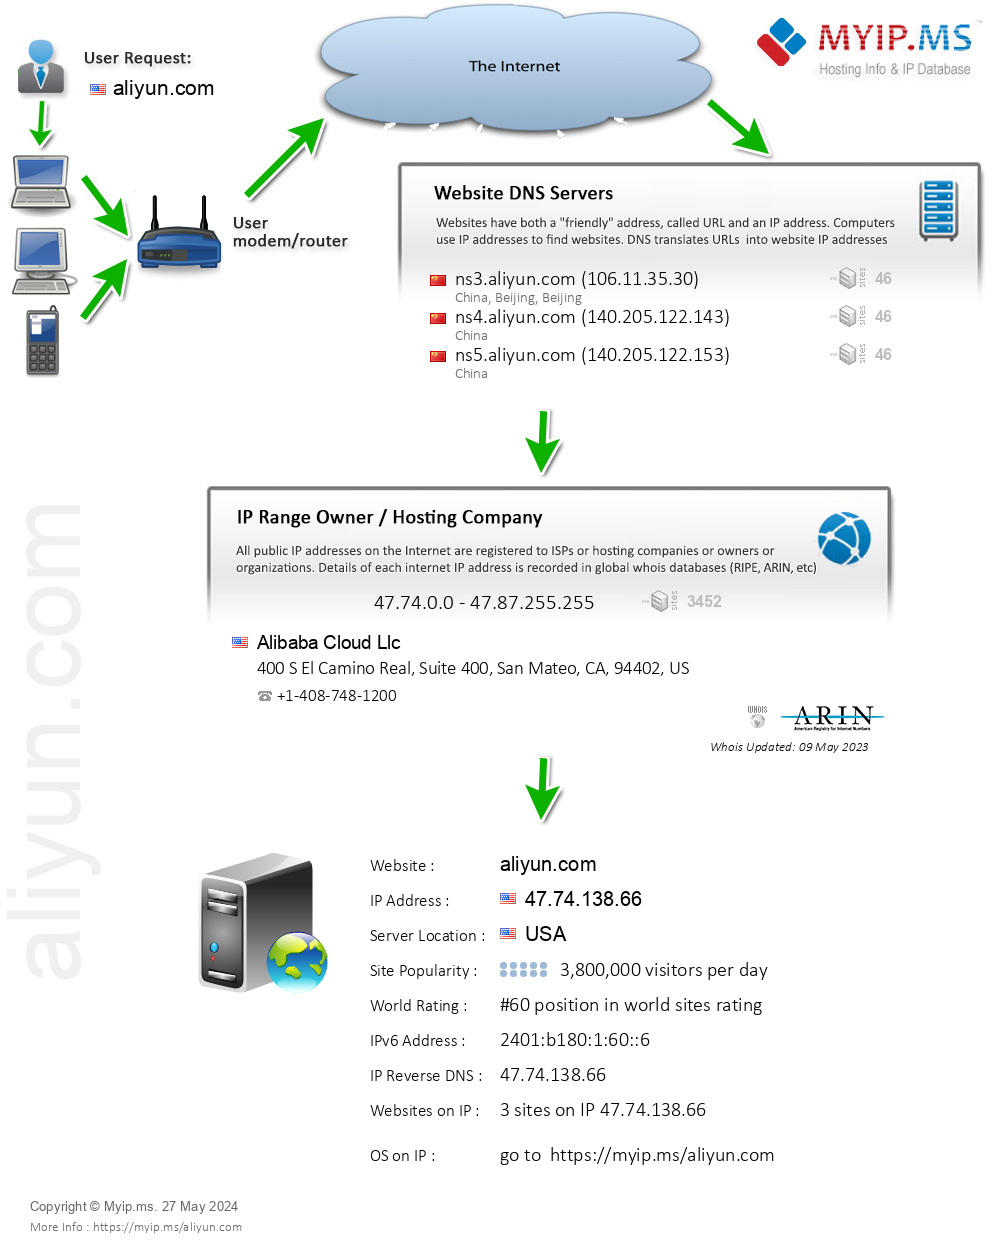 Aliyun.com - Website Hosting Visual IP Diagram